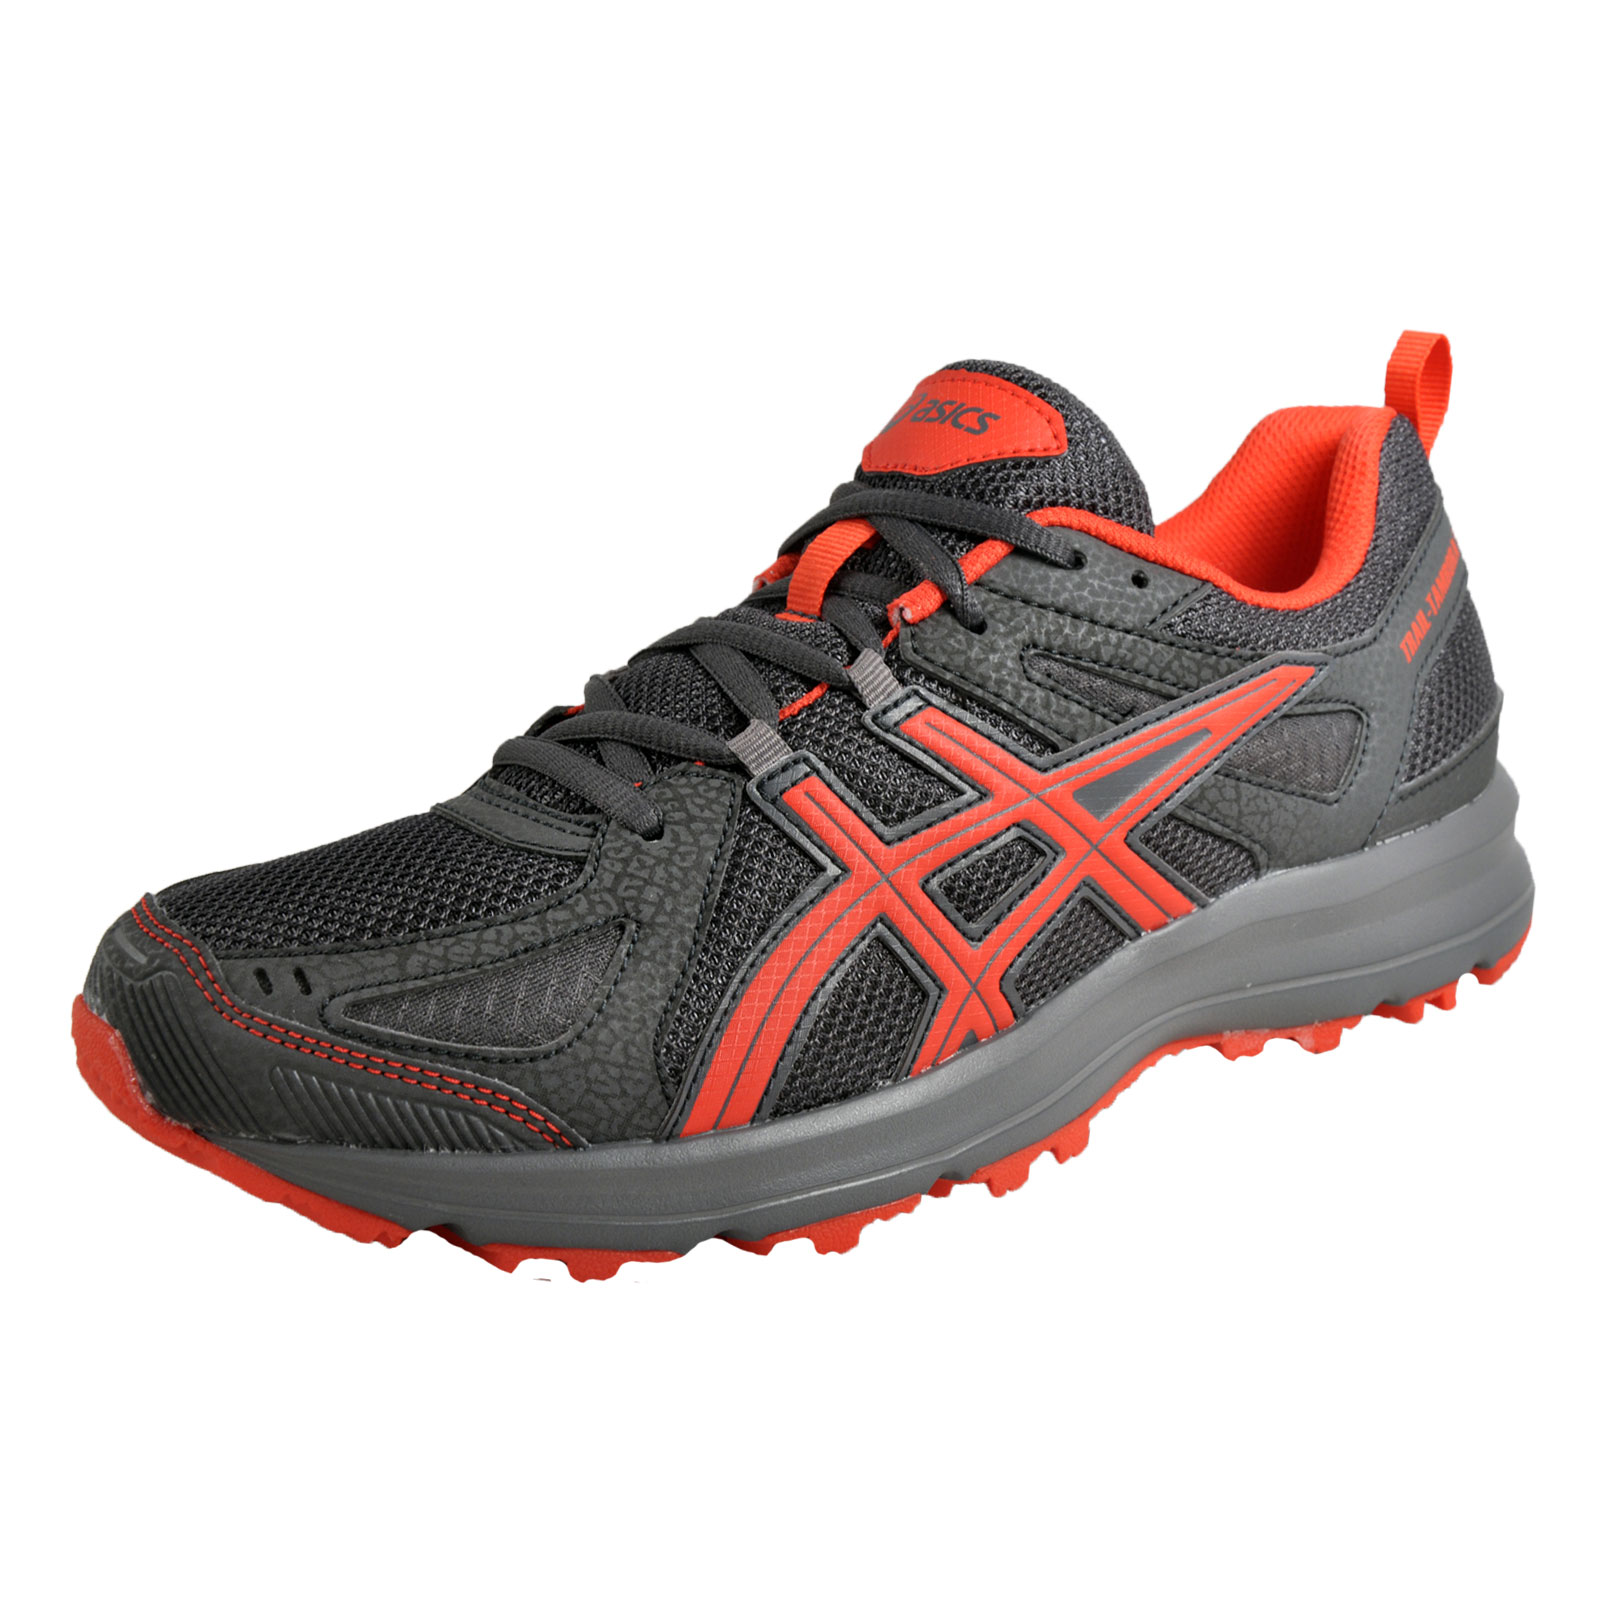 Asics Trail Tambora 5 Mens All Terrain Running Shoes Black Red | eBay